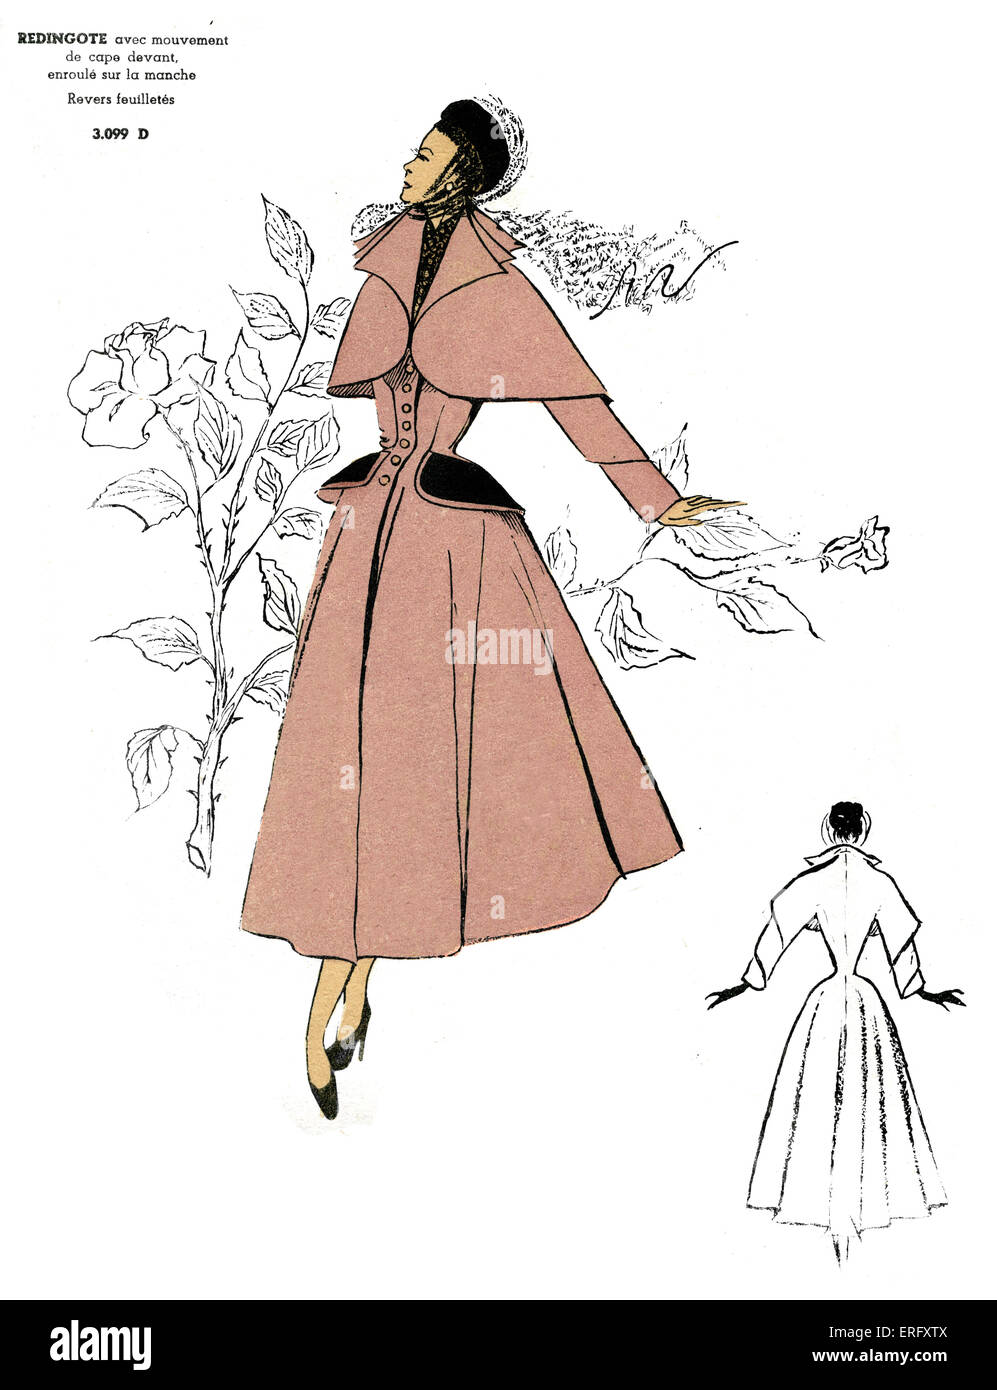 Französische Mode, Cutaway Coat Design mit prominenten Losbefestigung Kap / Cutaway Avec Mouvement de Kap. Für den späten 1940er Jahren. Stockfoto